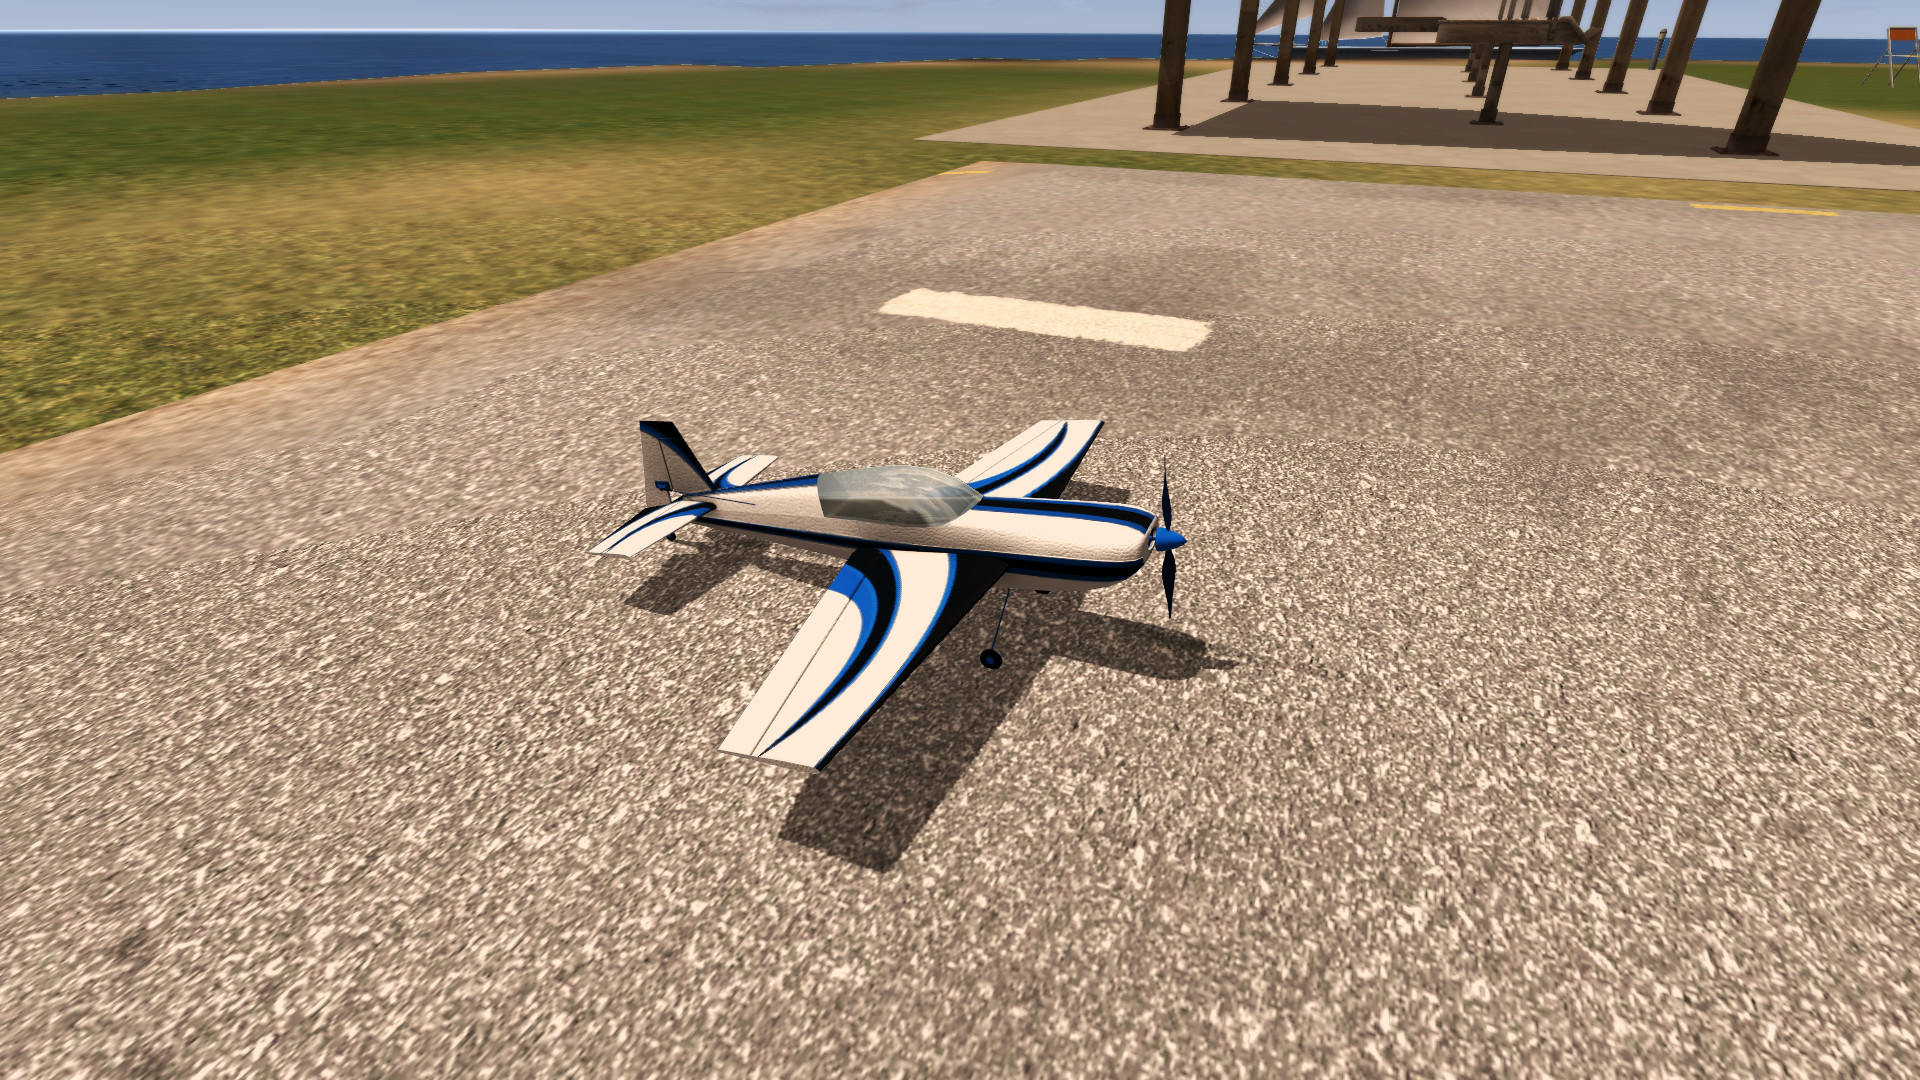 Extreme Plane Stunts Simulator for mac download free